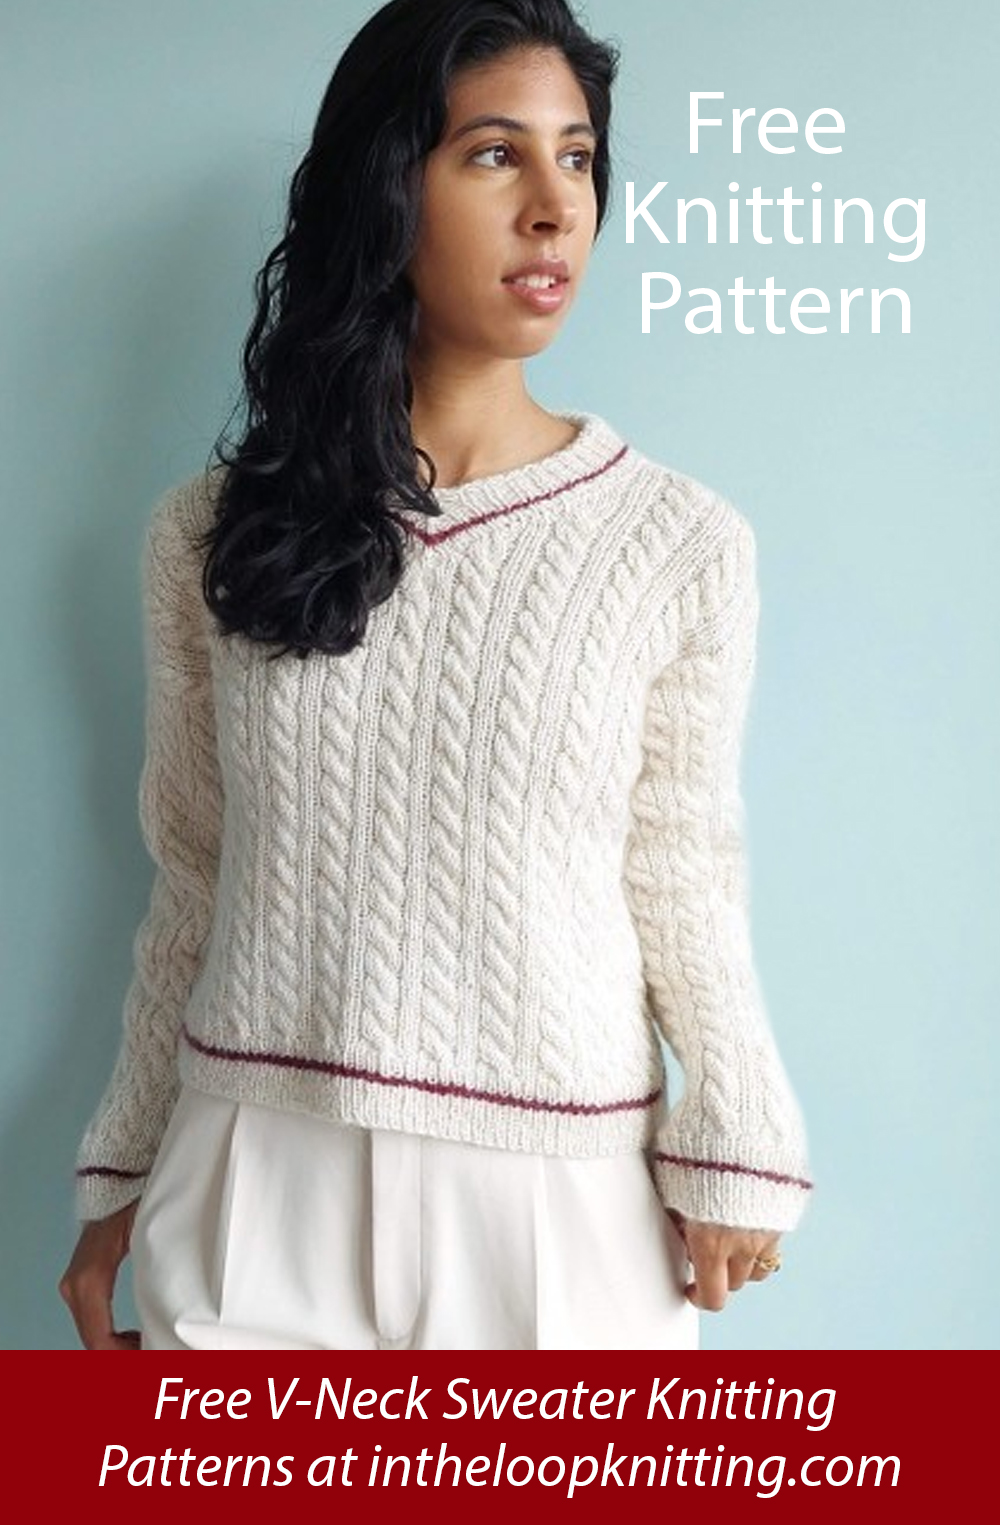 Free Tinseltown Sweater Knitting Pattern